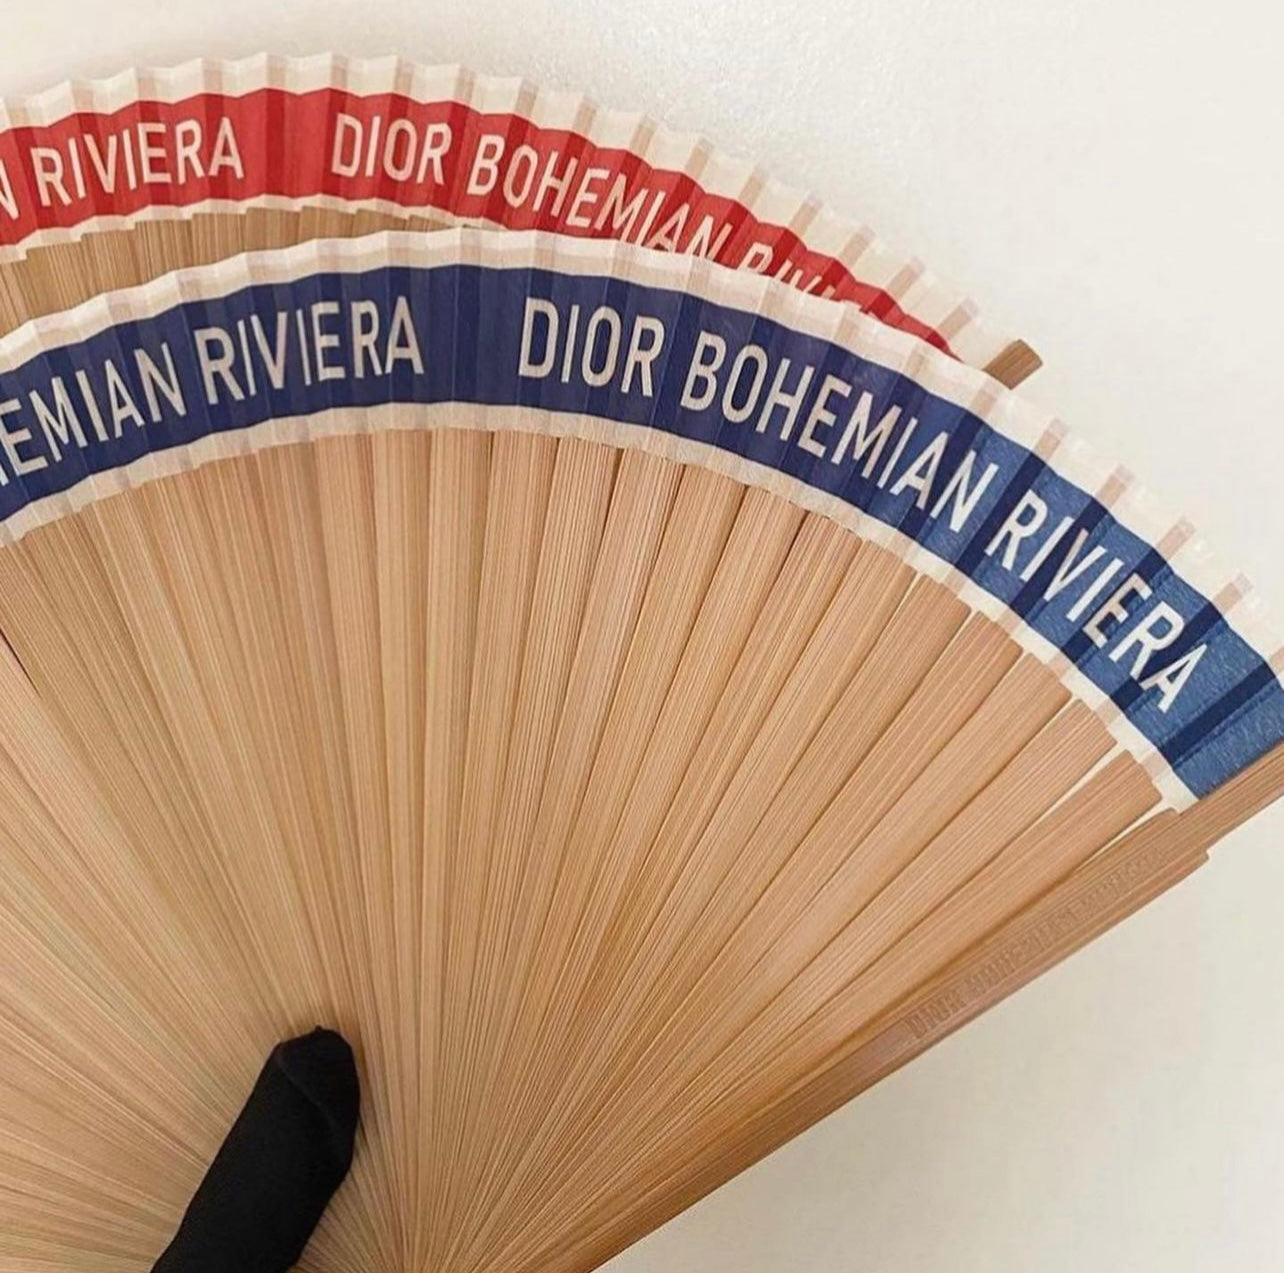 Dior Bohemian Riviera Folding Fan (Limited Edition)